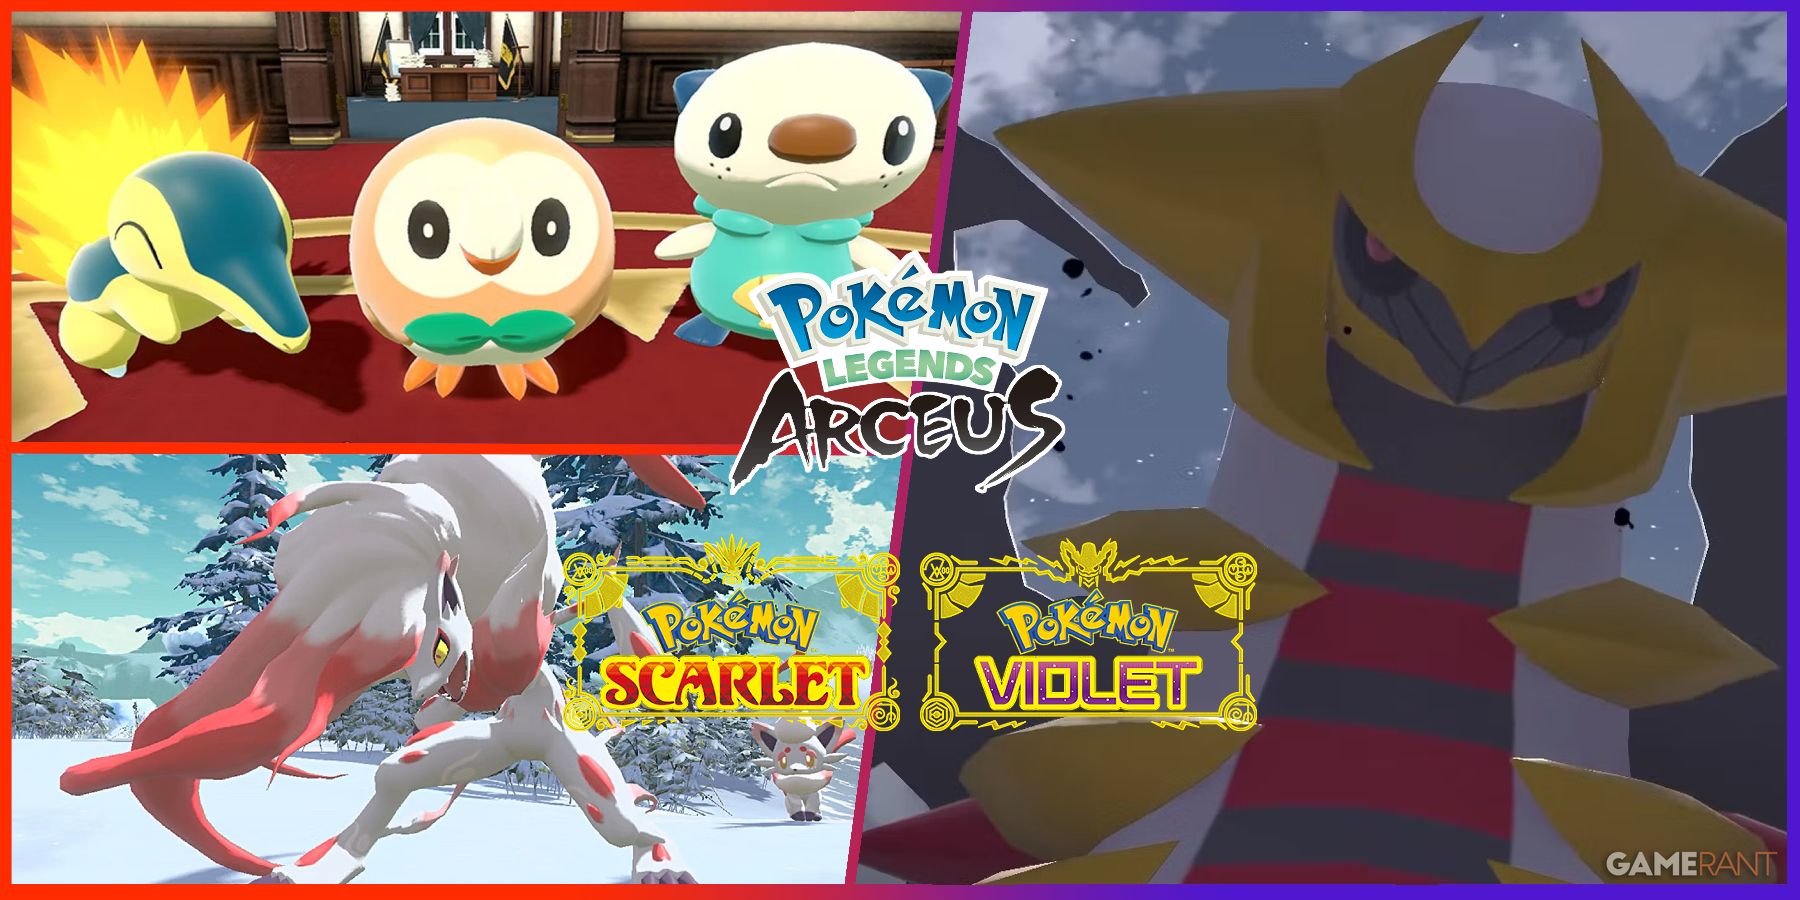 Diferenças entre Pokemon Legends Arceus e Pokemon Scarlet Violet #poke